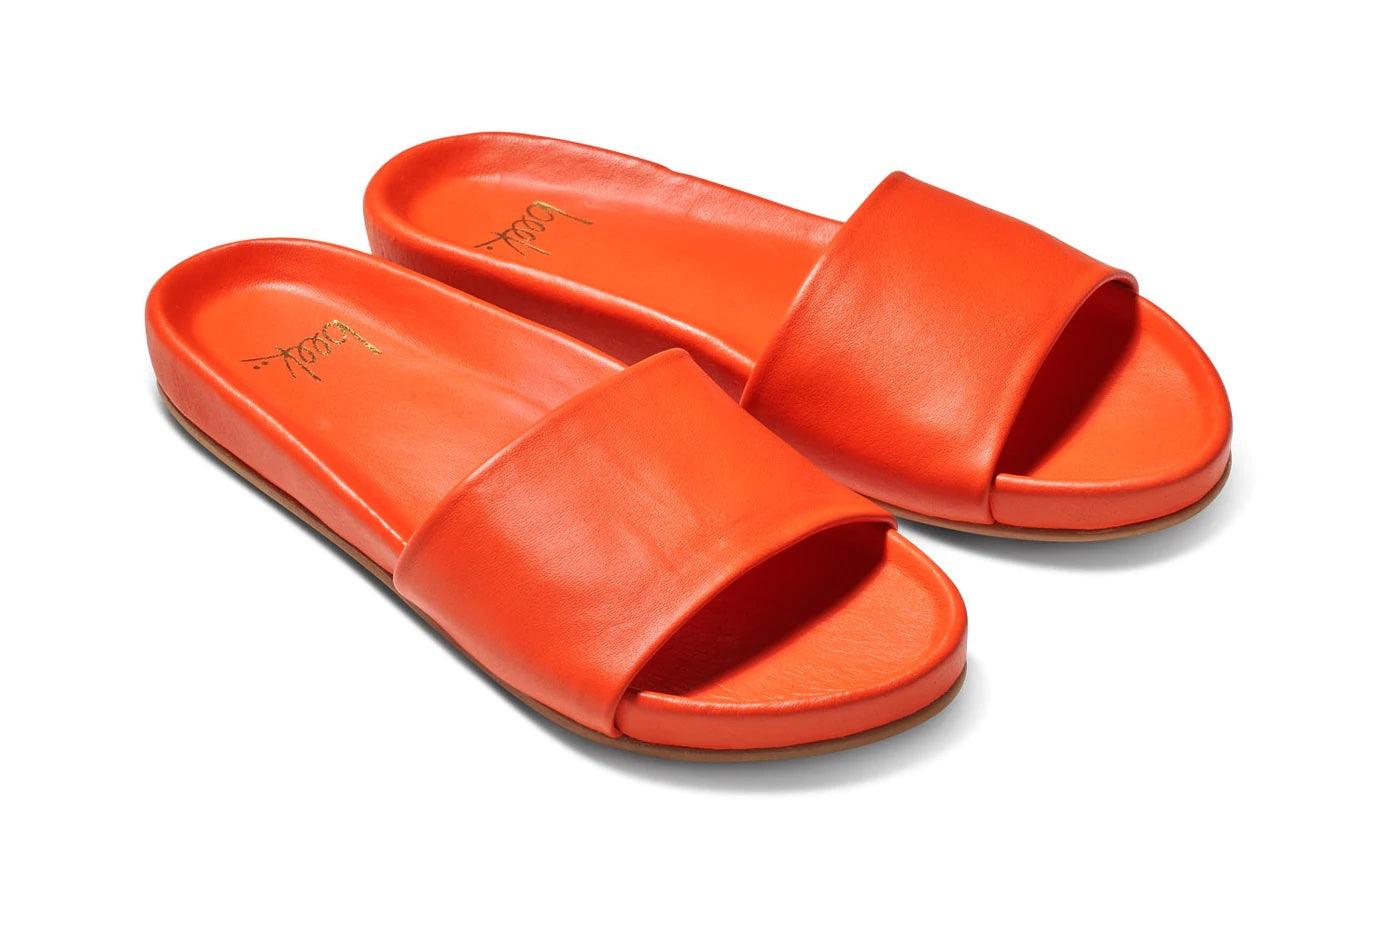 Gallito Sandal in Tangerine by Beek - Haven